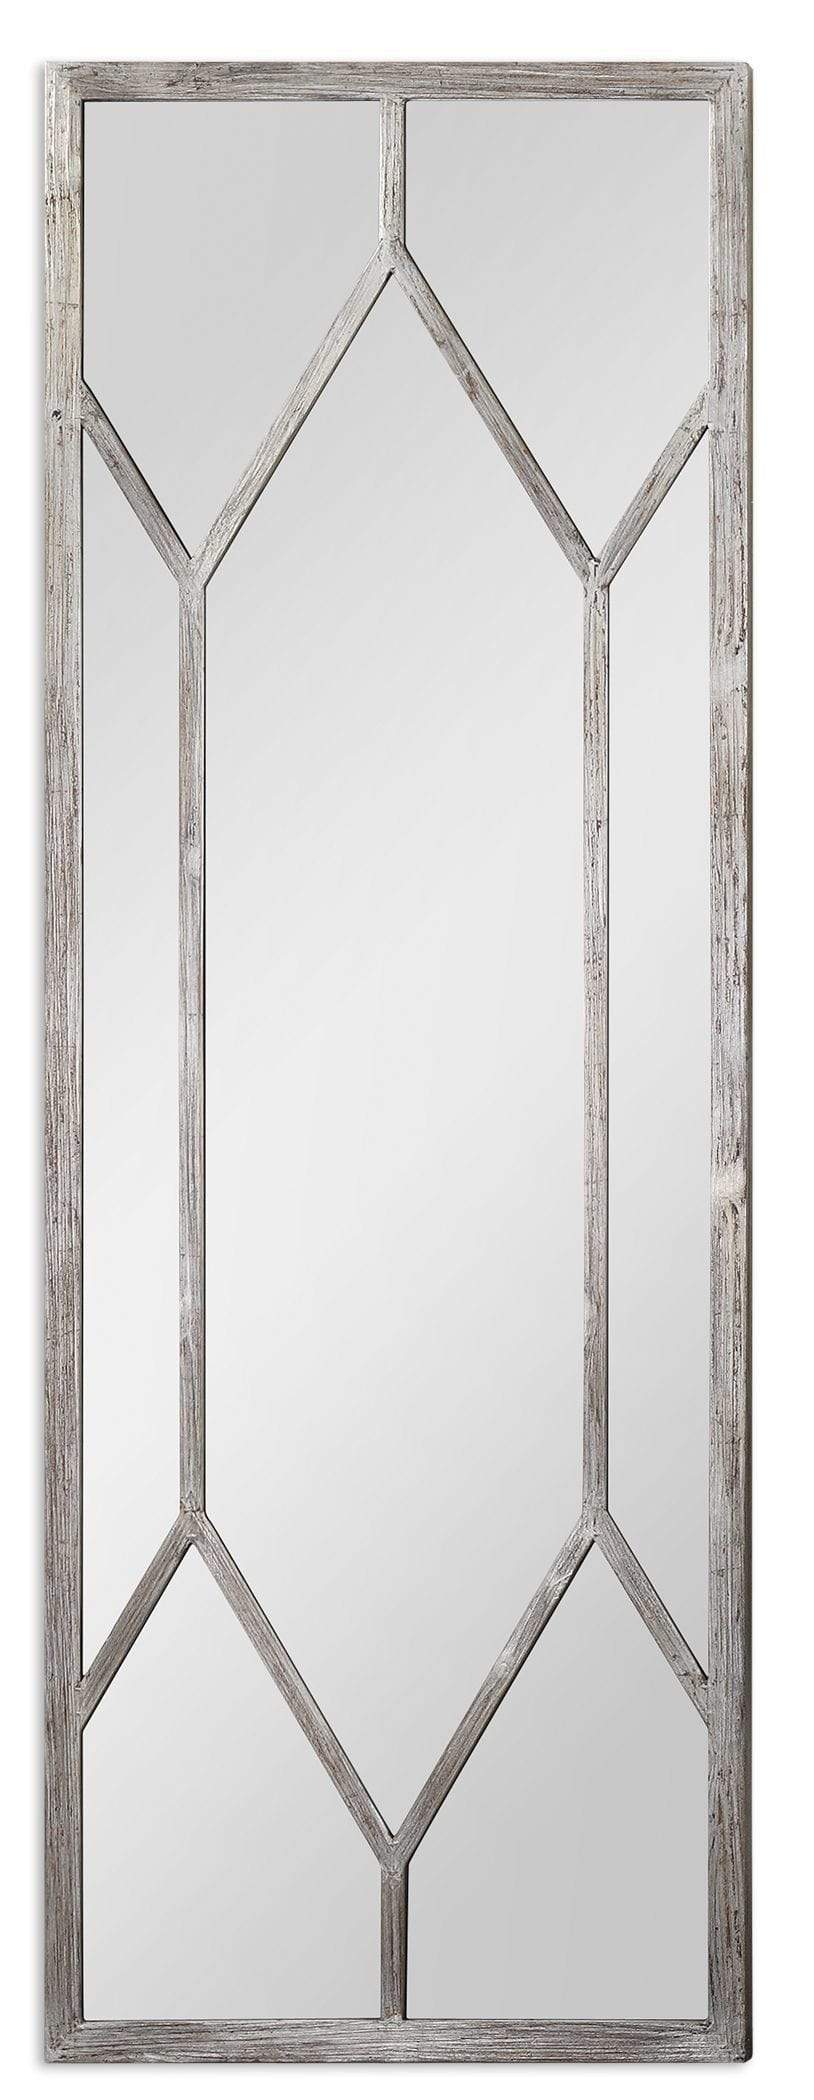 Sarcon Oversized Antiqued Silver Mirror Uttermost